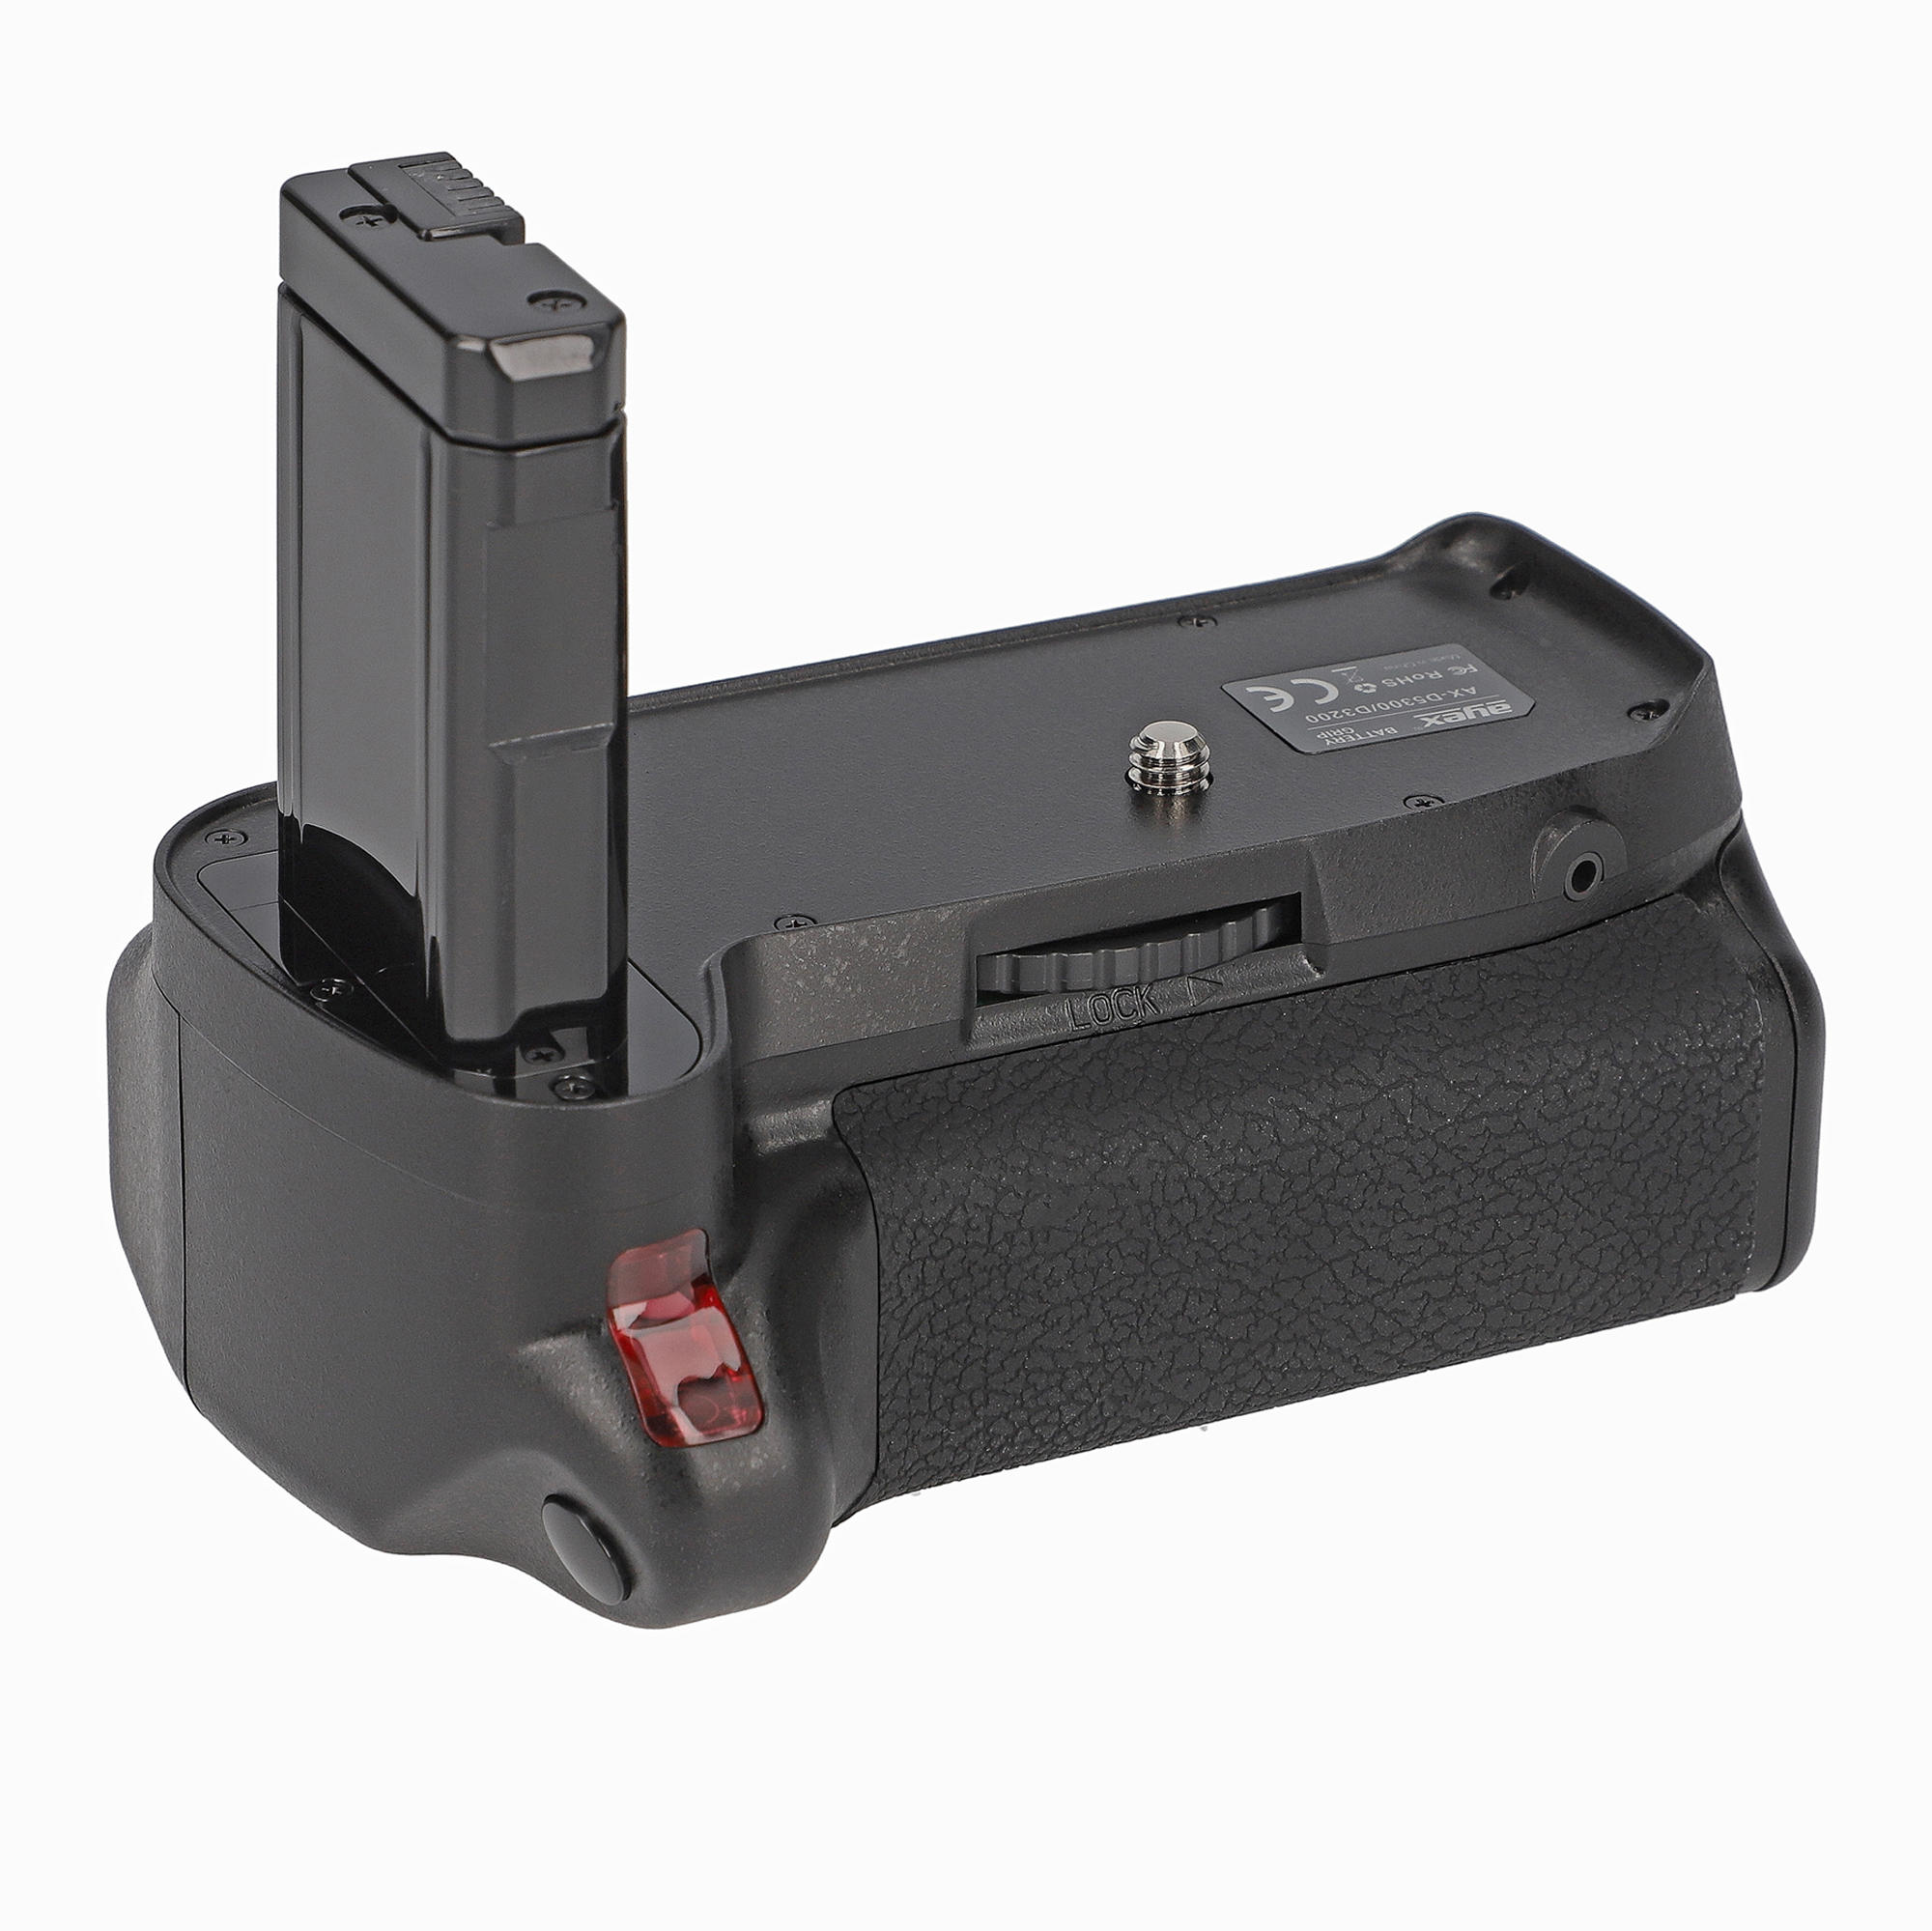 BG-2F, Batteriegriff, D3300 Black Batteriegriff D5300 AYEX D3200 D3100 mit Nikon wie IR-Auslöser